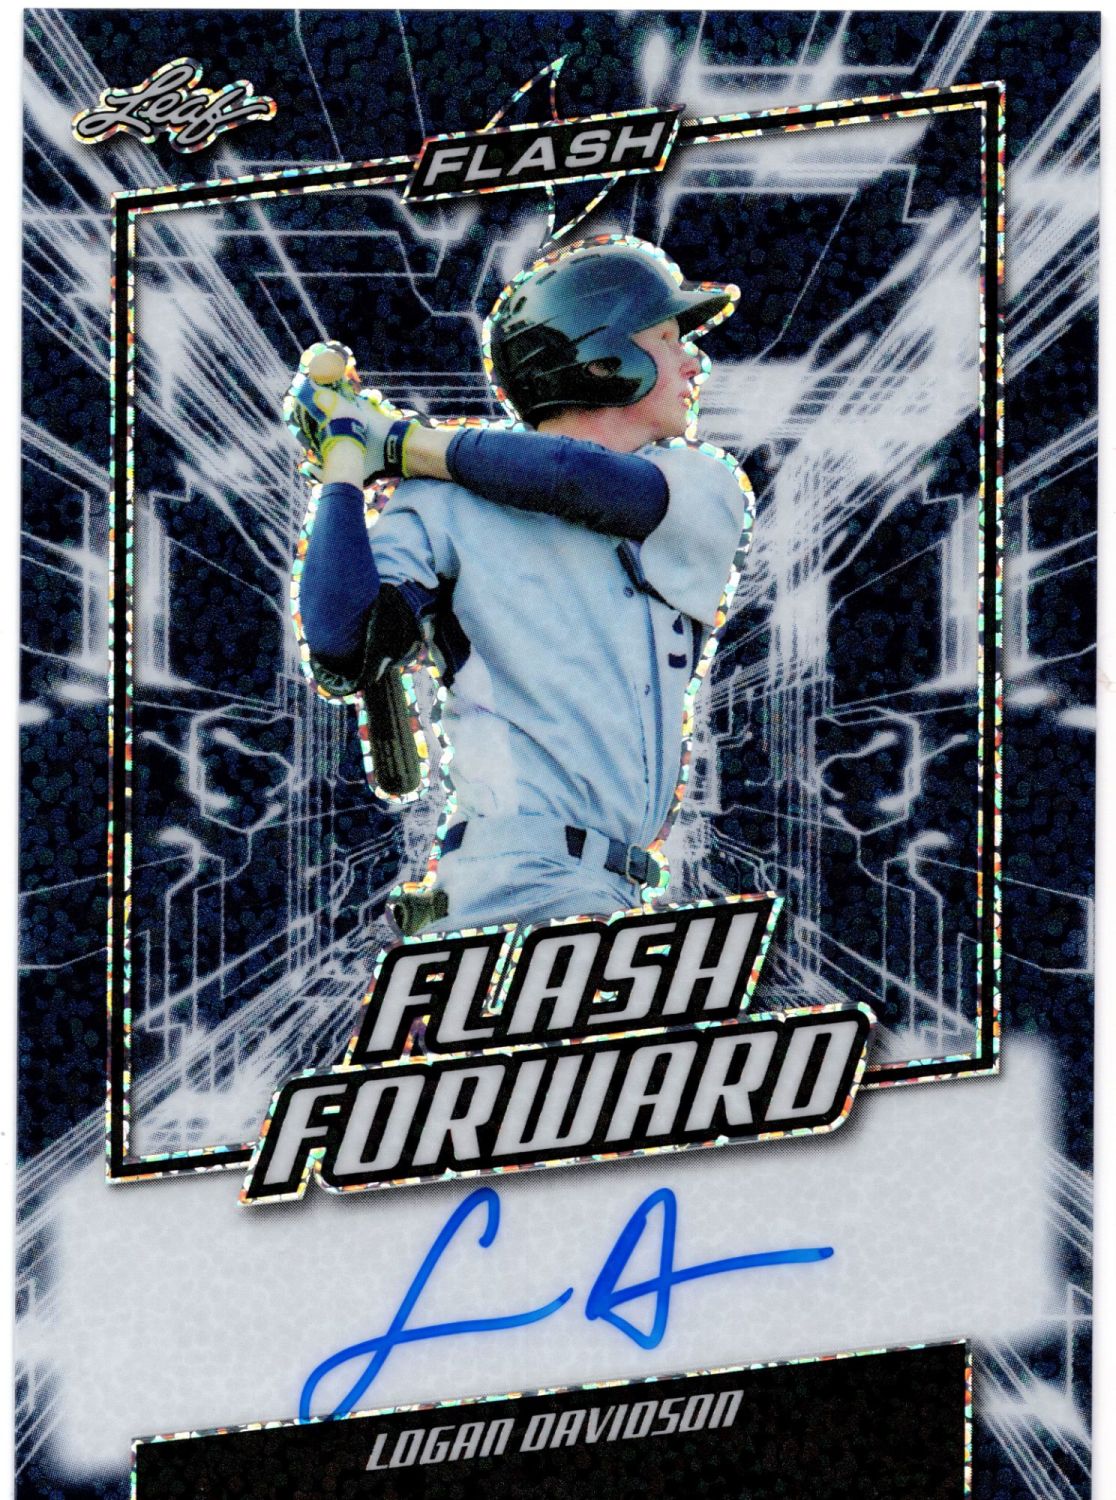 2019 Leaf Flash Baseball LOGAN DAVIDSON Flash Forward Rookie Autograph /50 